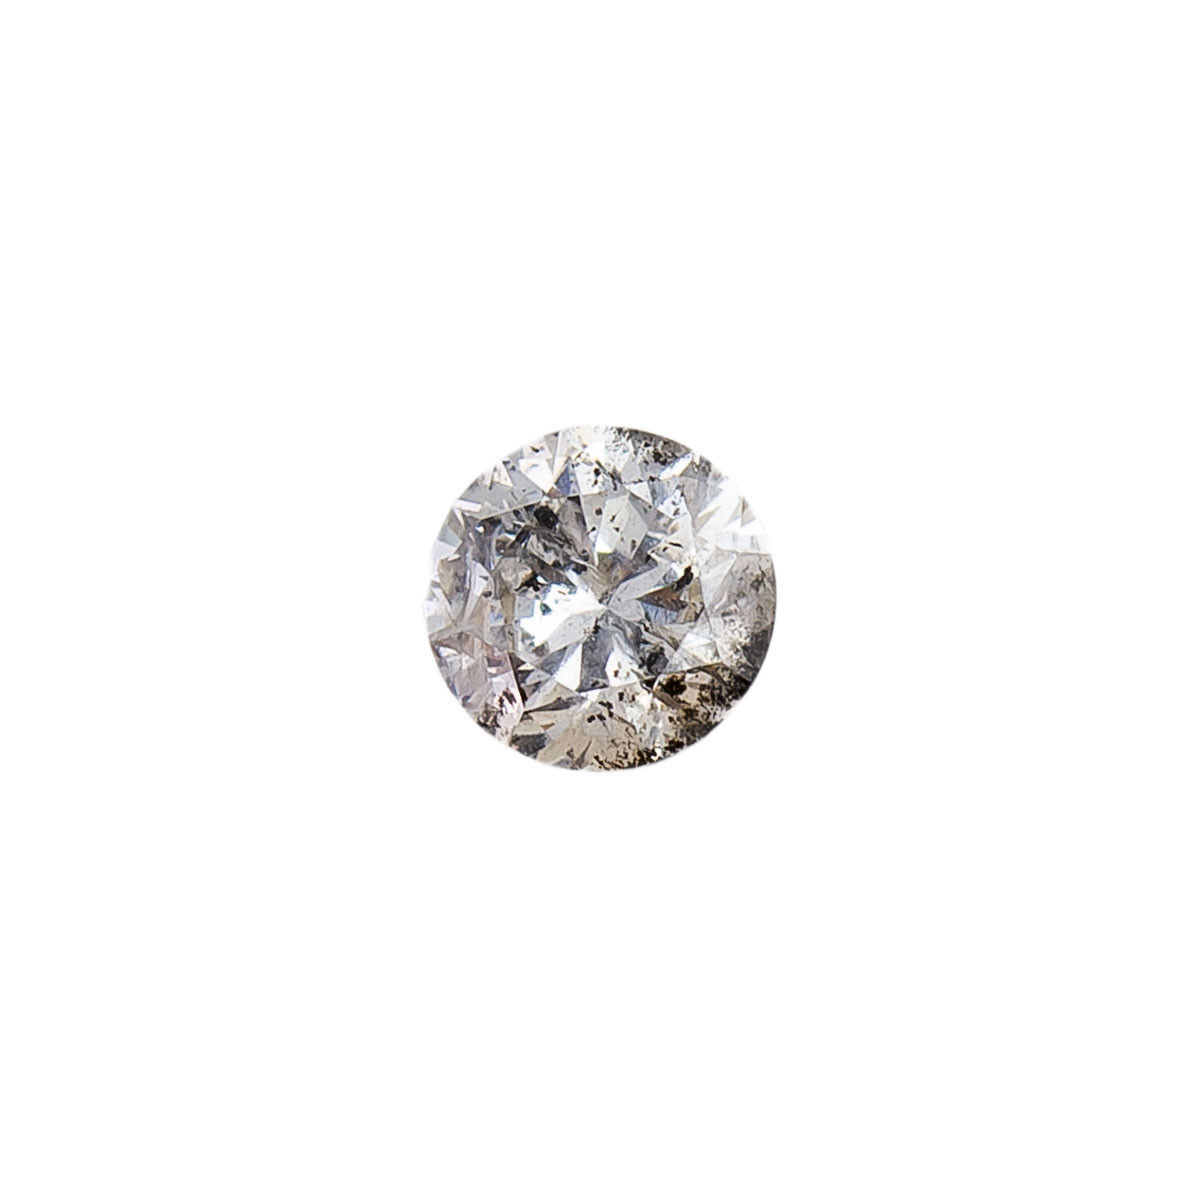 Tomfoolery, 0.74ct Salt & Pepper Brilliant Cut Diamond, tf Stones